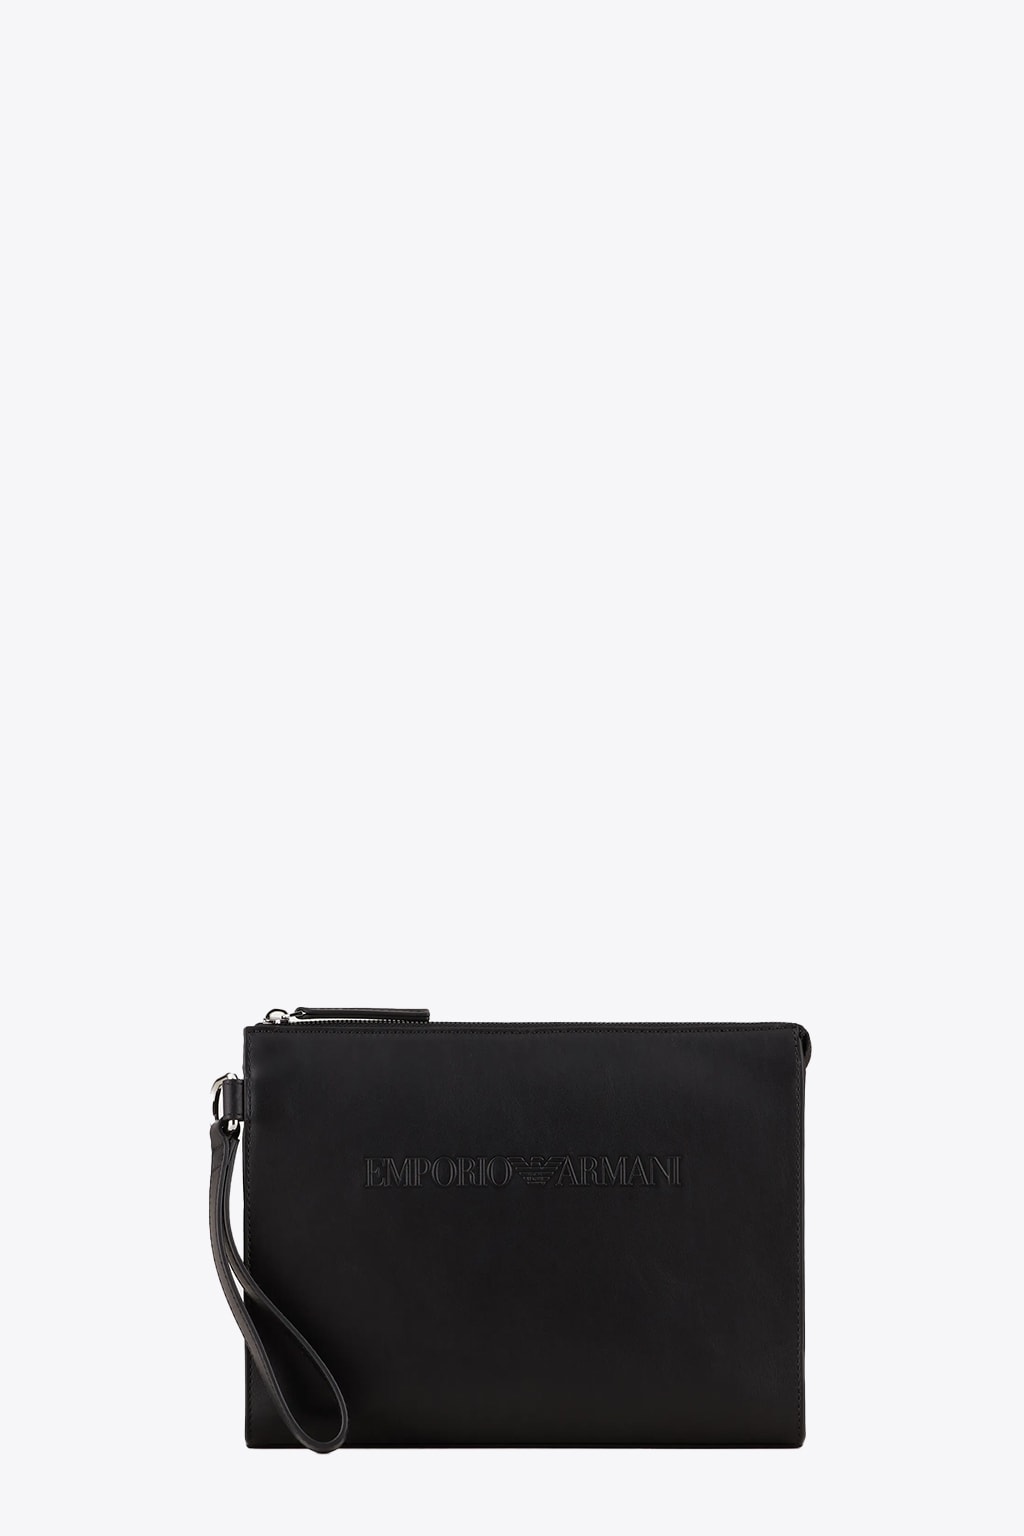 Emporio Armani Flat Case Black leather small flat case with logo.